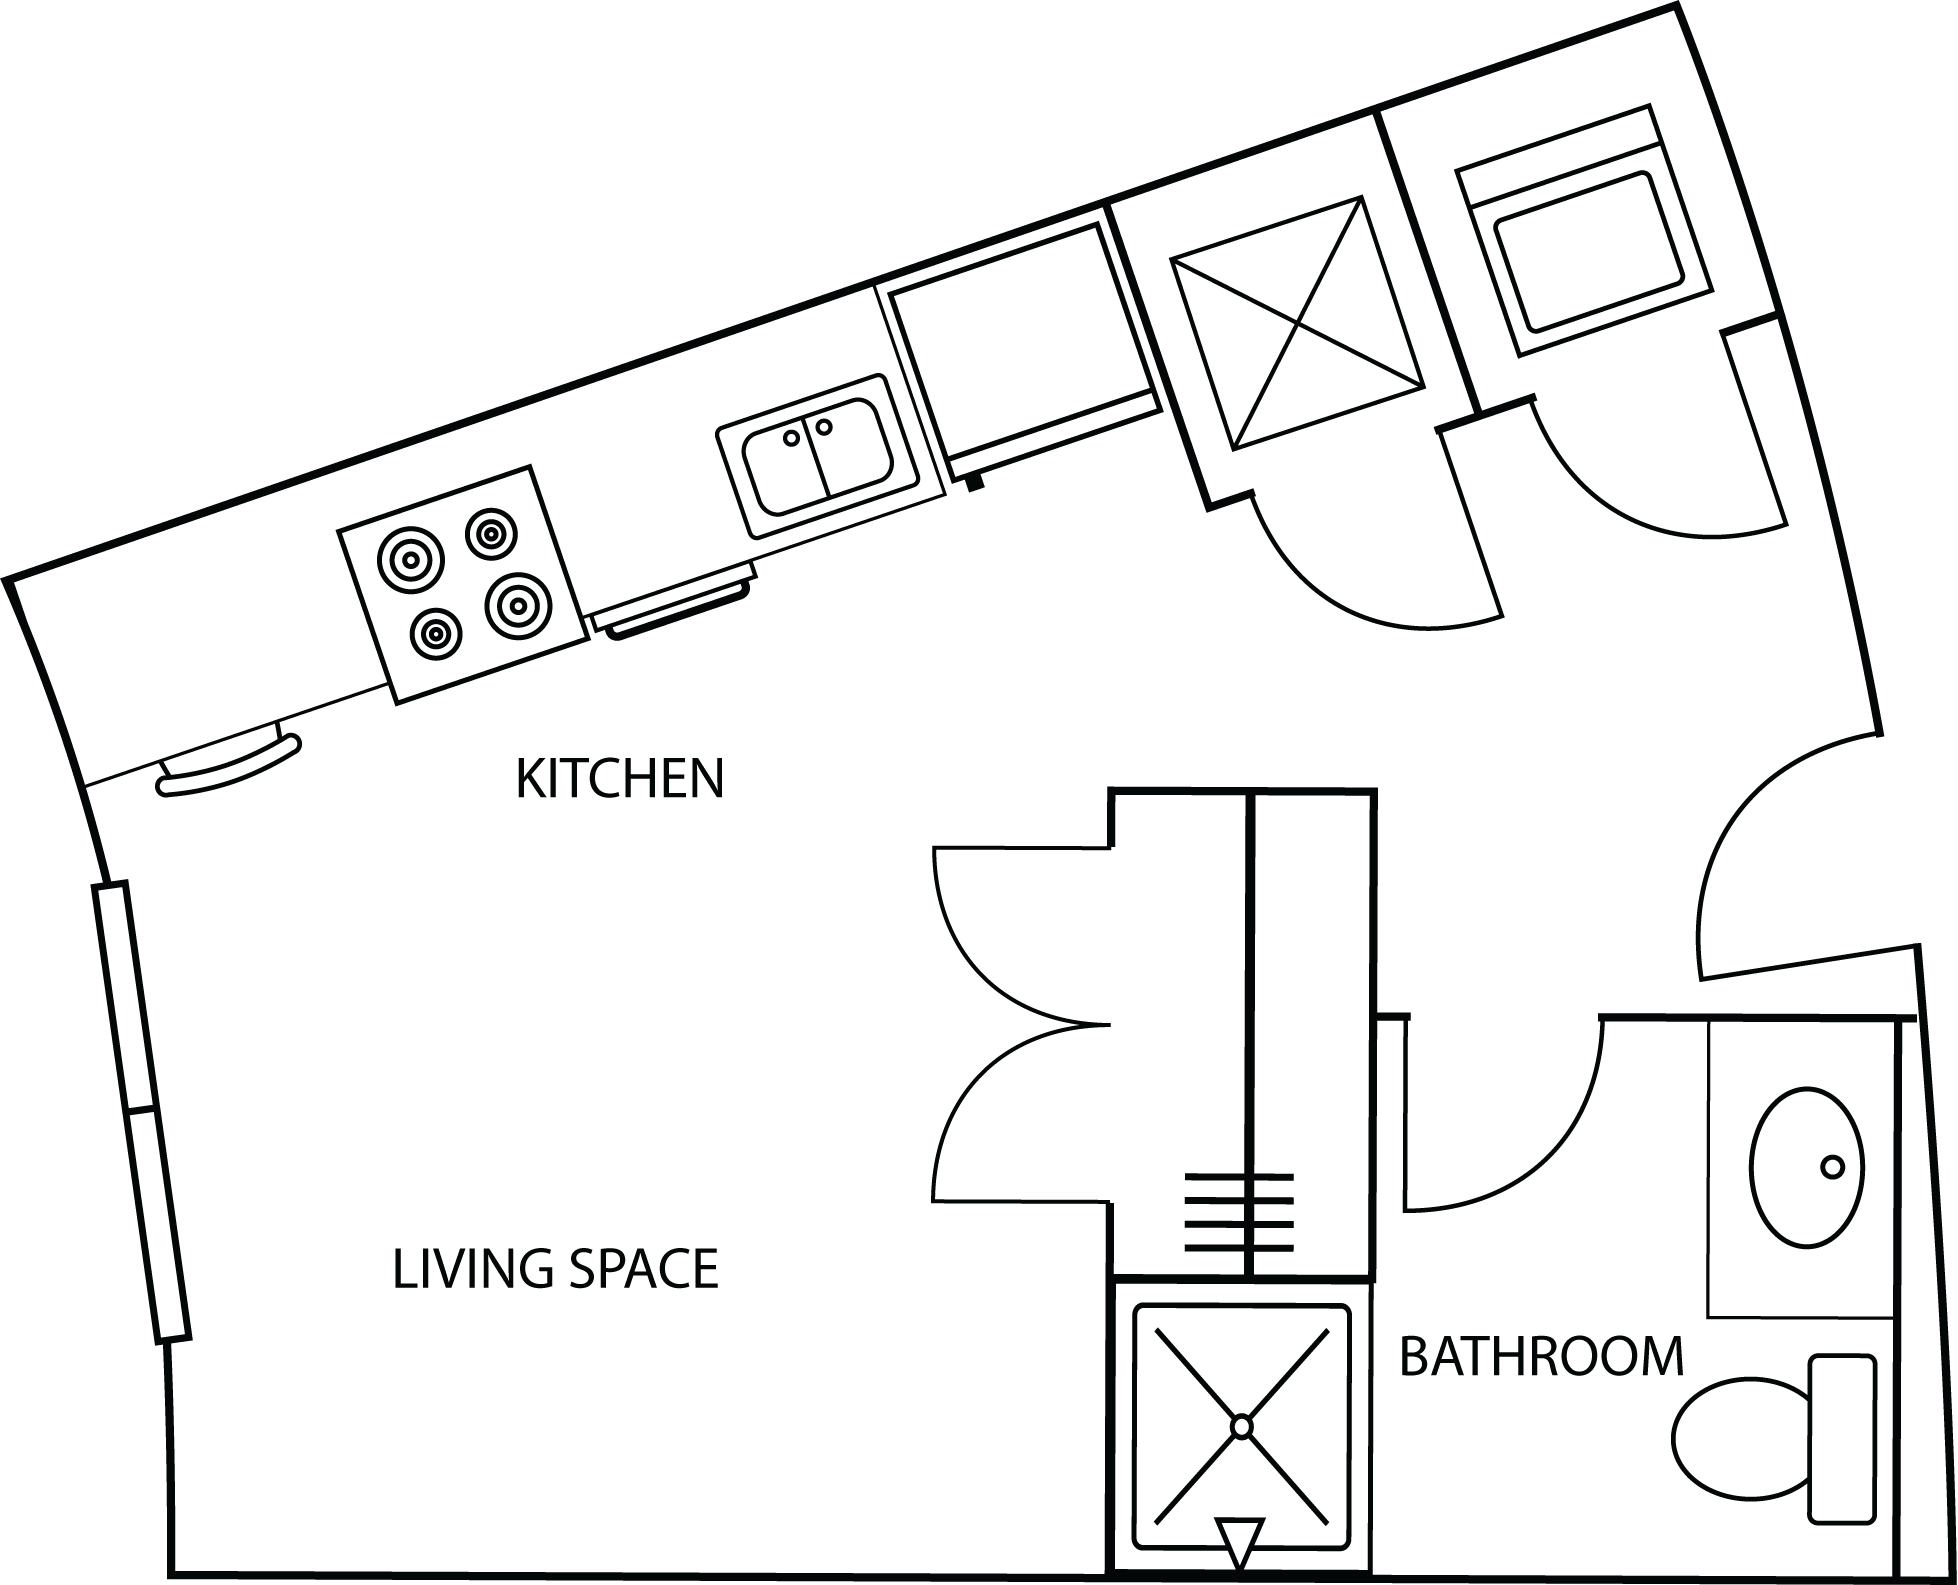 Aspire Floorplan Layout Illustration - Studio for 2 People